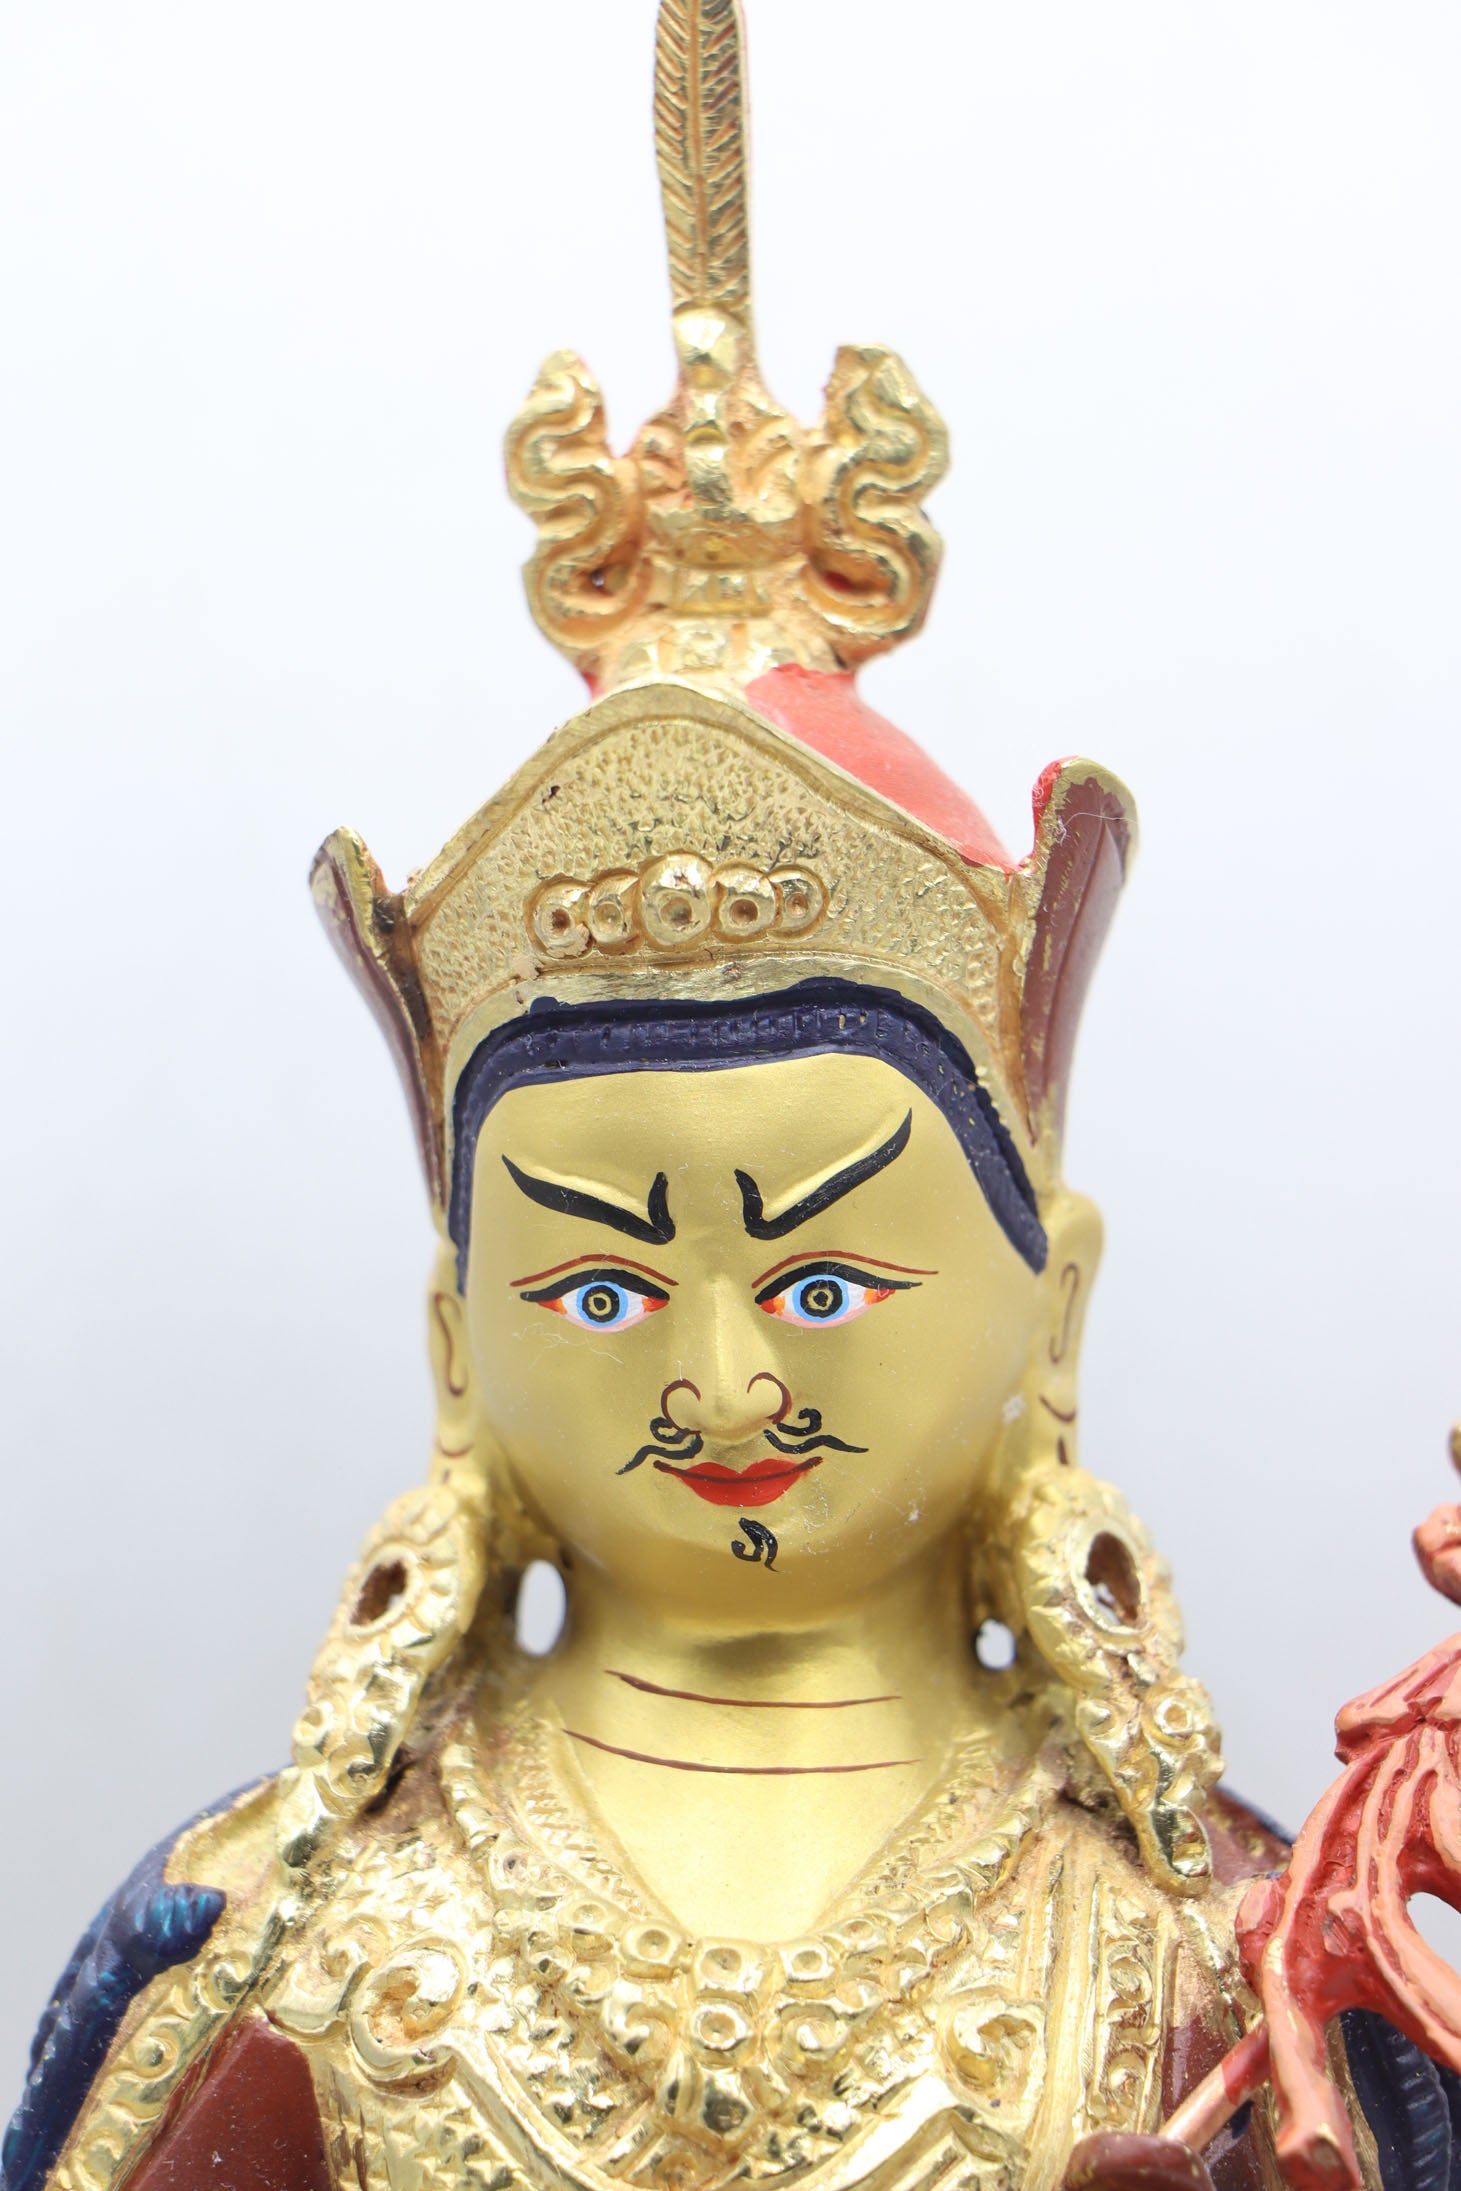 Guru Rinpoche Statue for wisdom, compassion, and spiritual power.